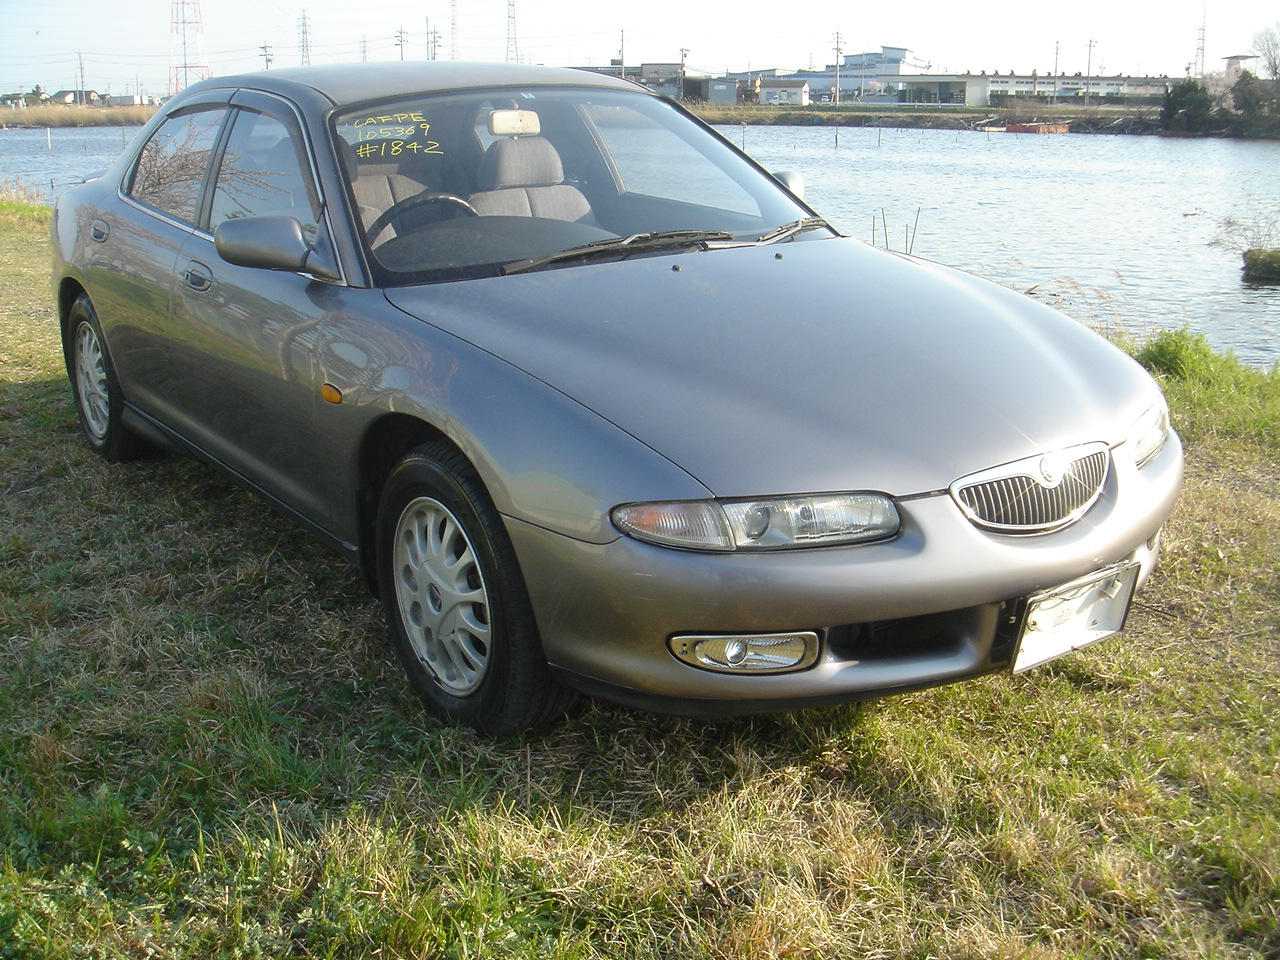 Mazda Eunos-500  2.0 i V6 24V 160 KM - dane techniczne, wymiary, spalanie i opinie